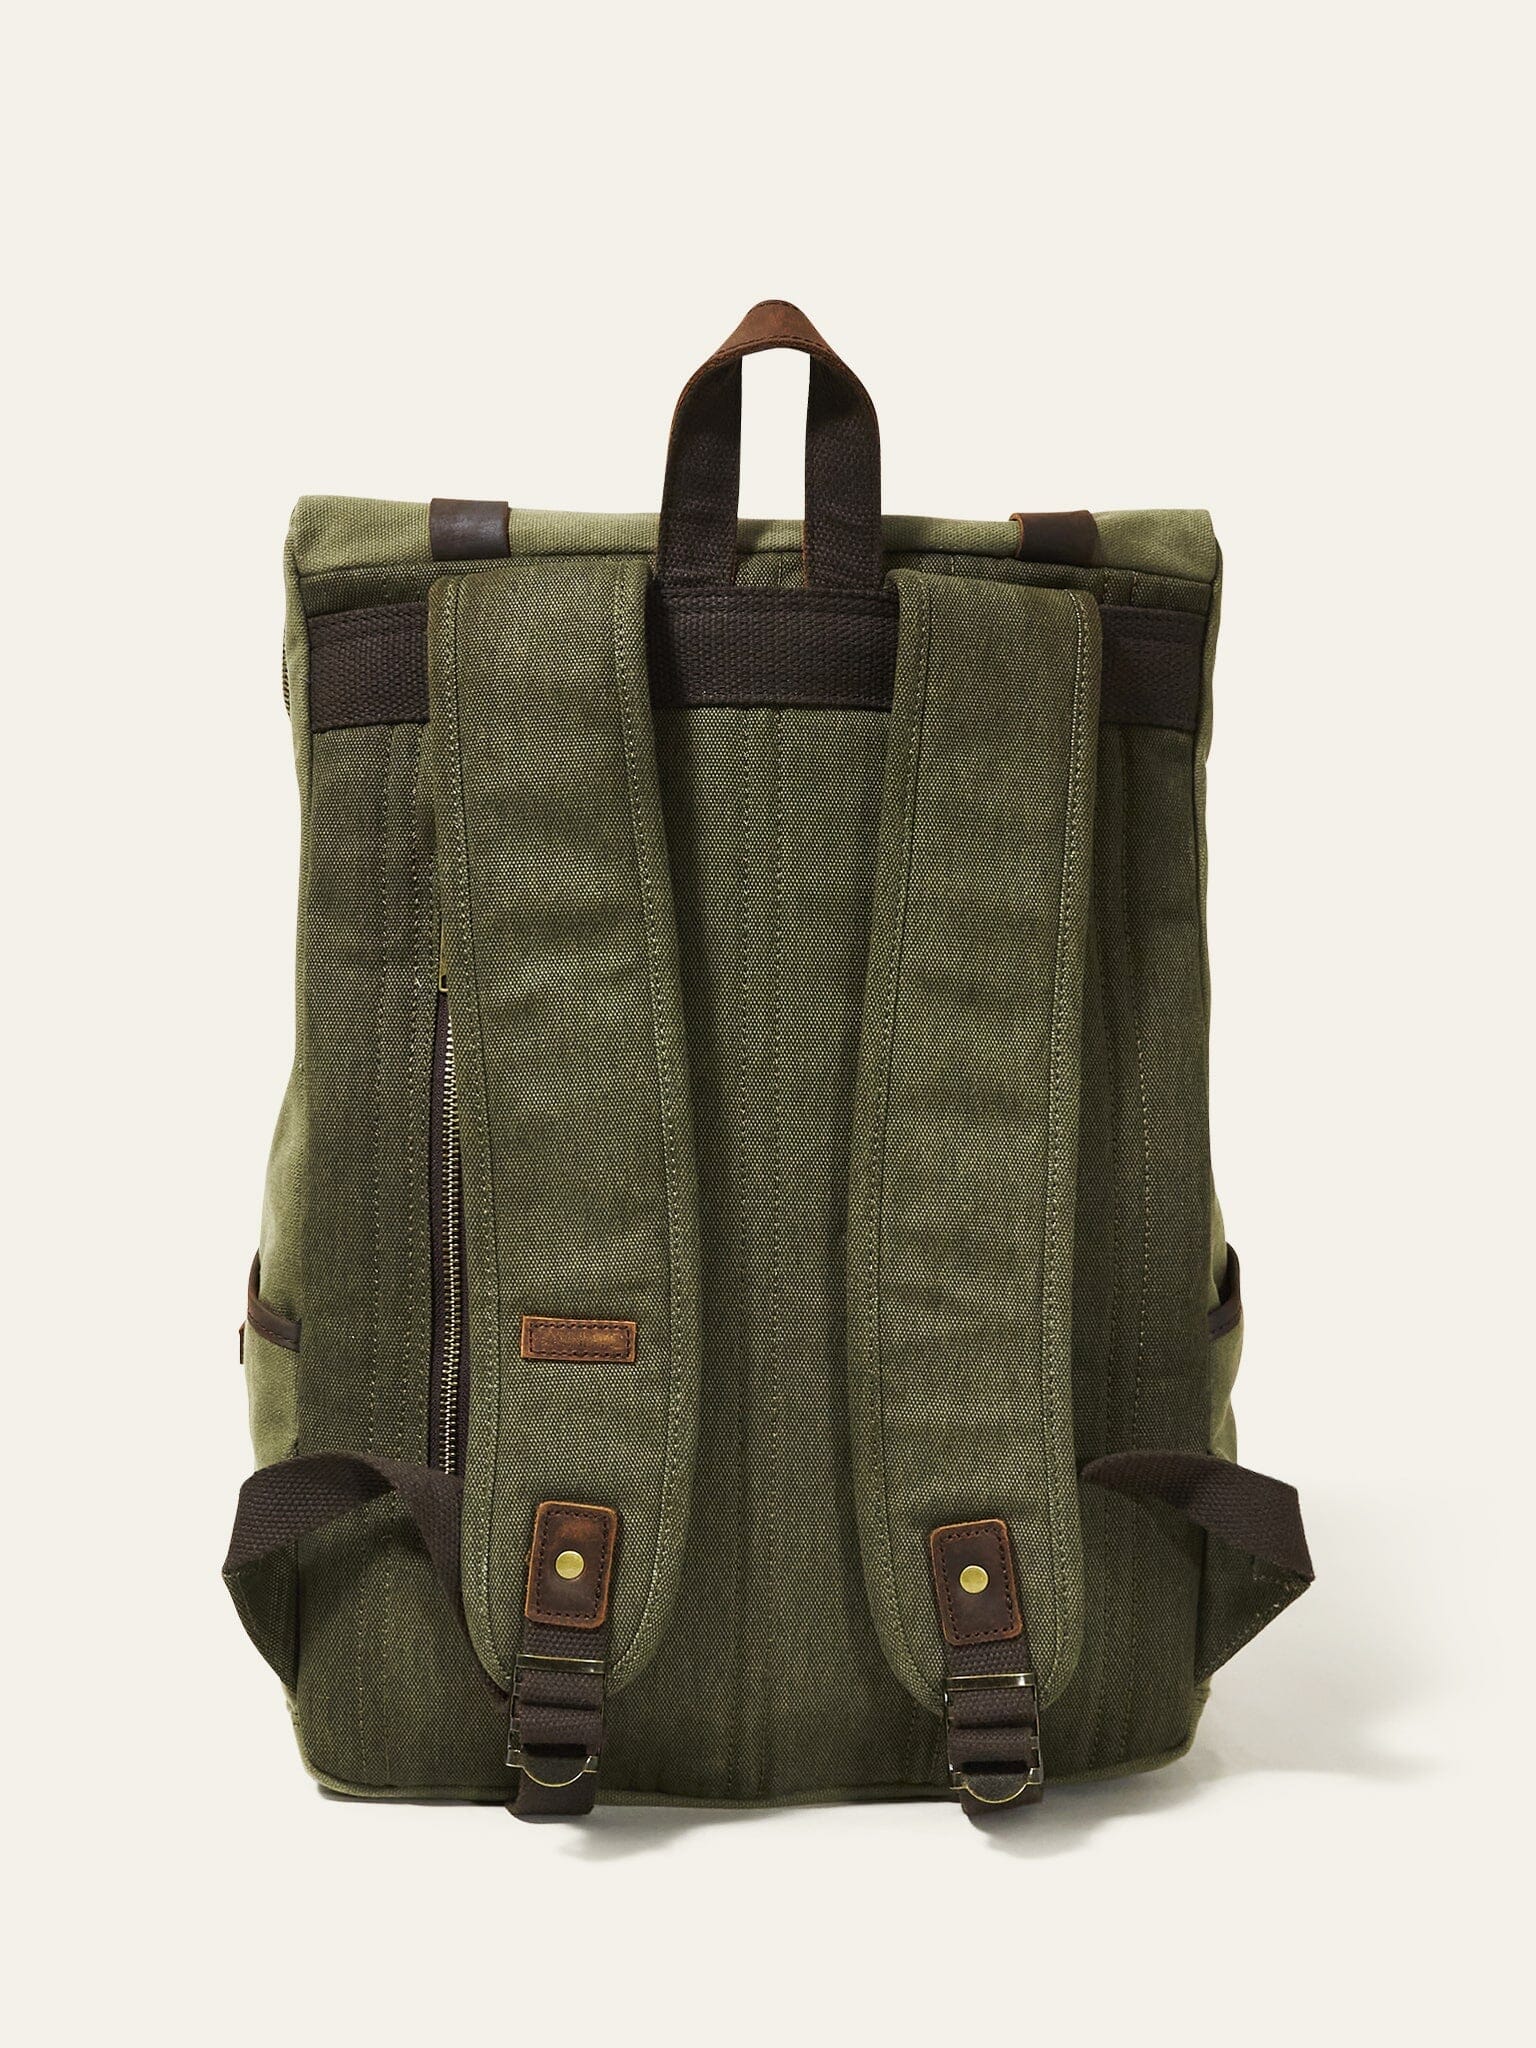 khaki-slate-authentic-bali-backpack-427810_a9a5a5da-0d90-4af3-8fc4-f5d22cdb1c34.jpg